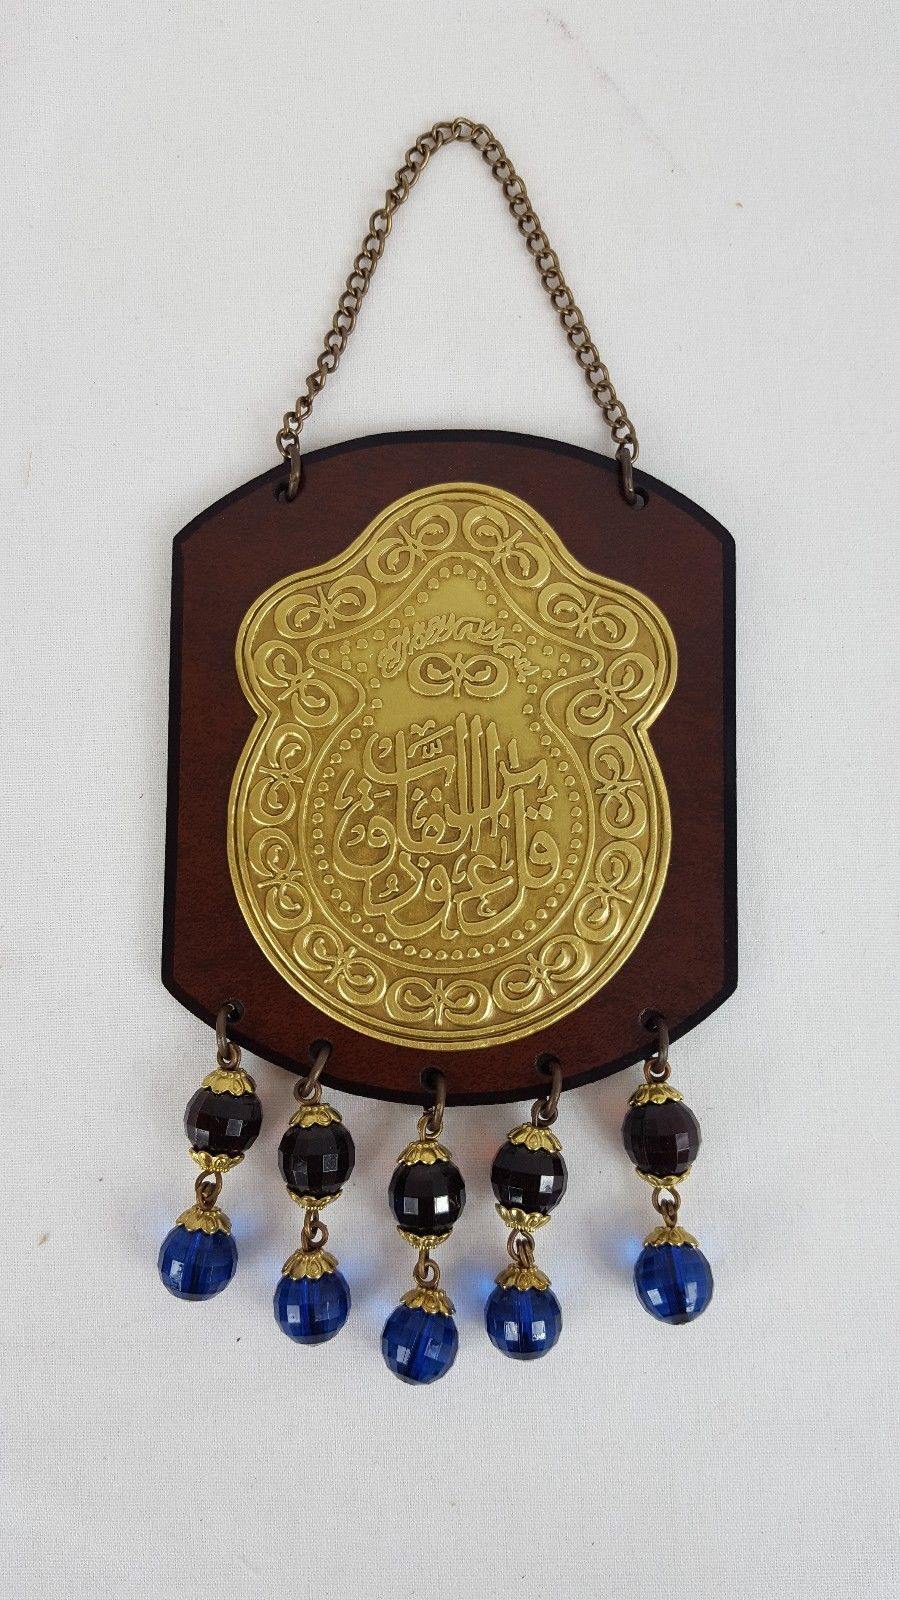 5" Home Blessing Wall Door Hanging Koran Quran Islamic Brass Graved - Islamic Shop